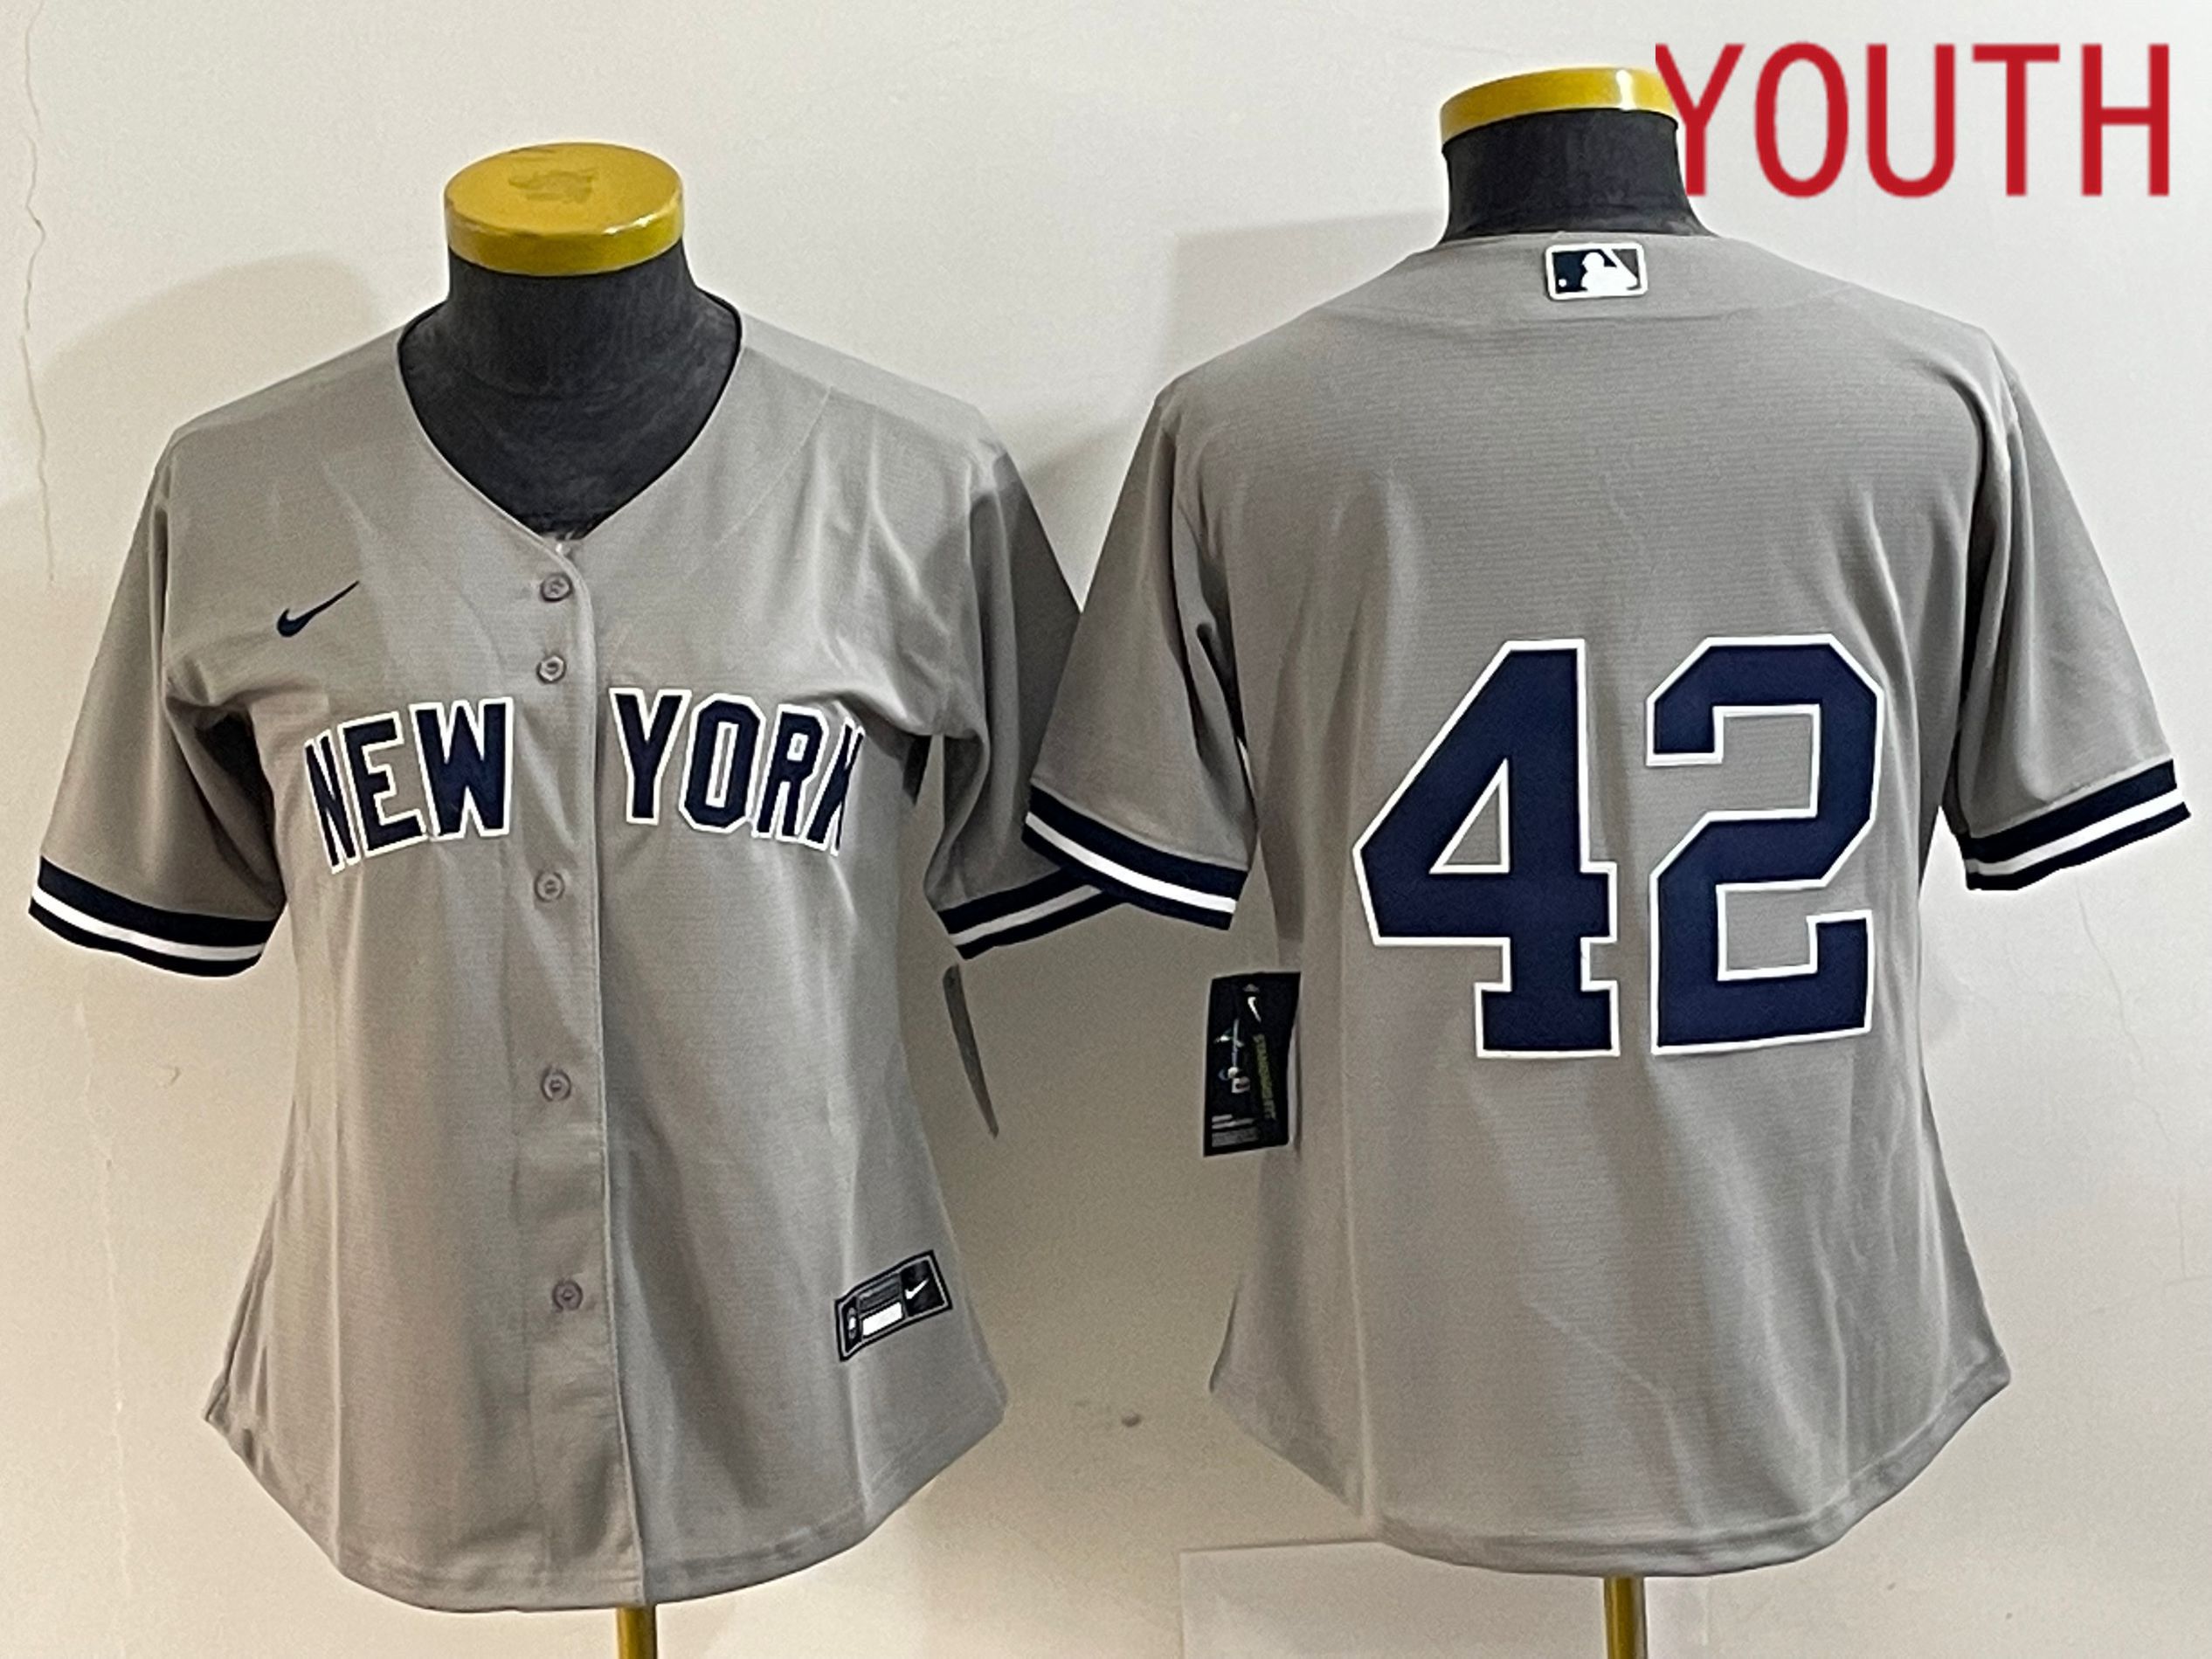 Youth New York Yankees 42 No Name Nike Game MLB Jersey